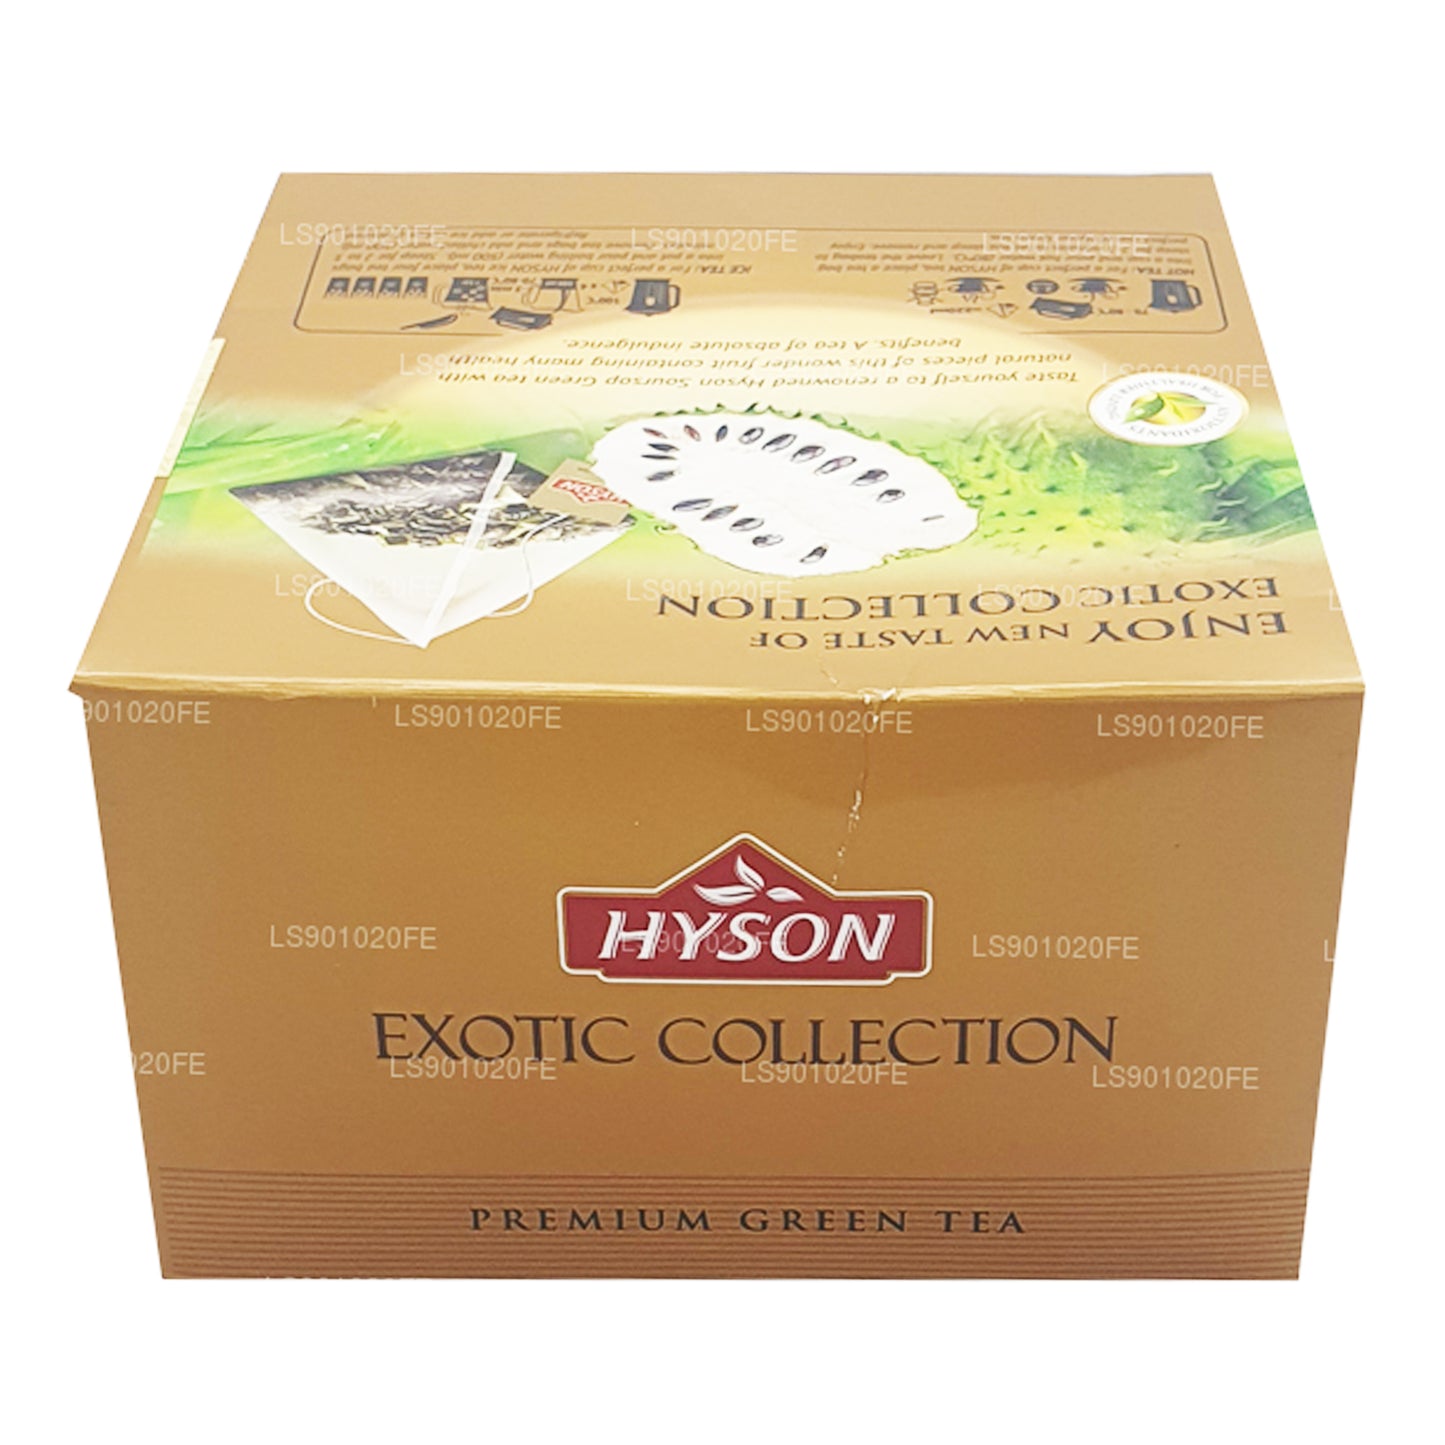 Hyson Soursp Fantasy (40g) 20 Tea Bags